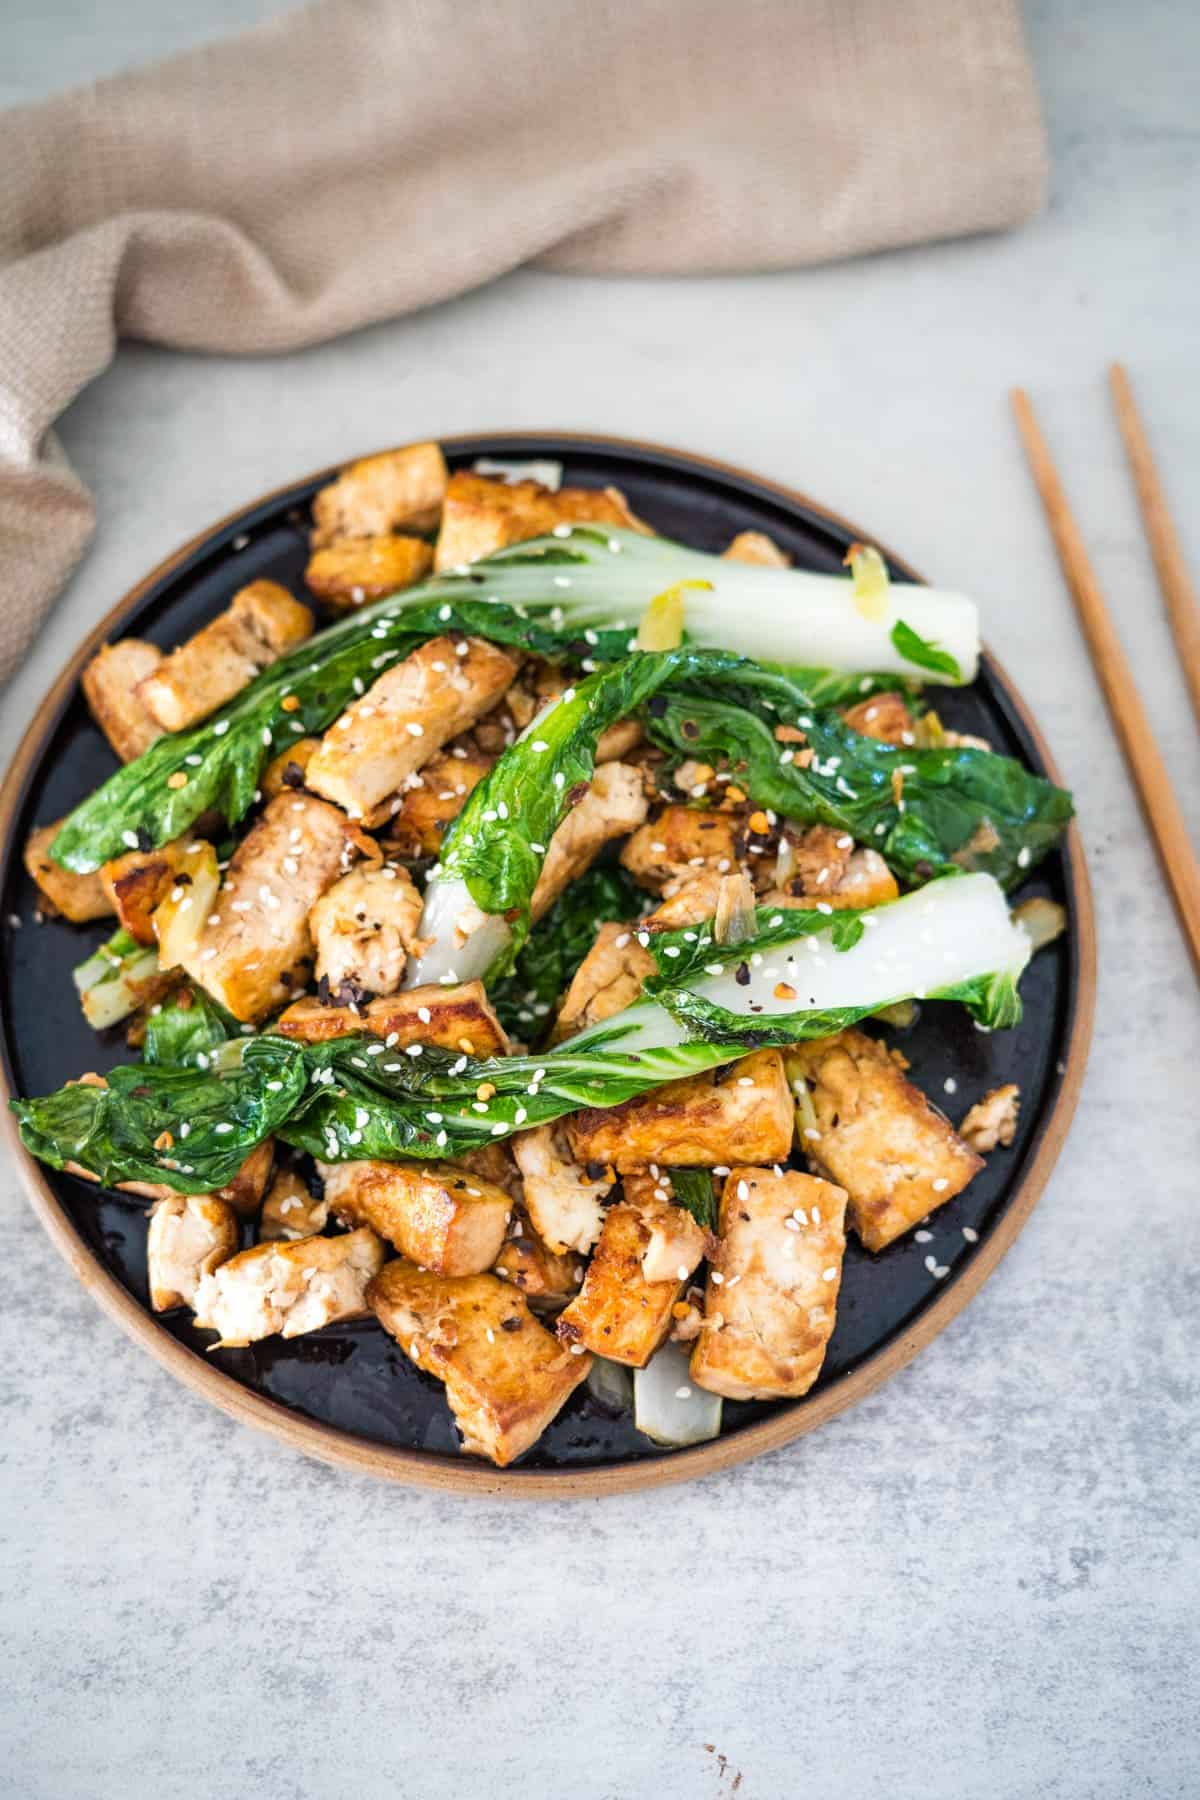 Tofu and greens on a plate with chopsticks.